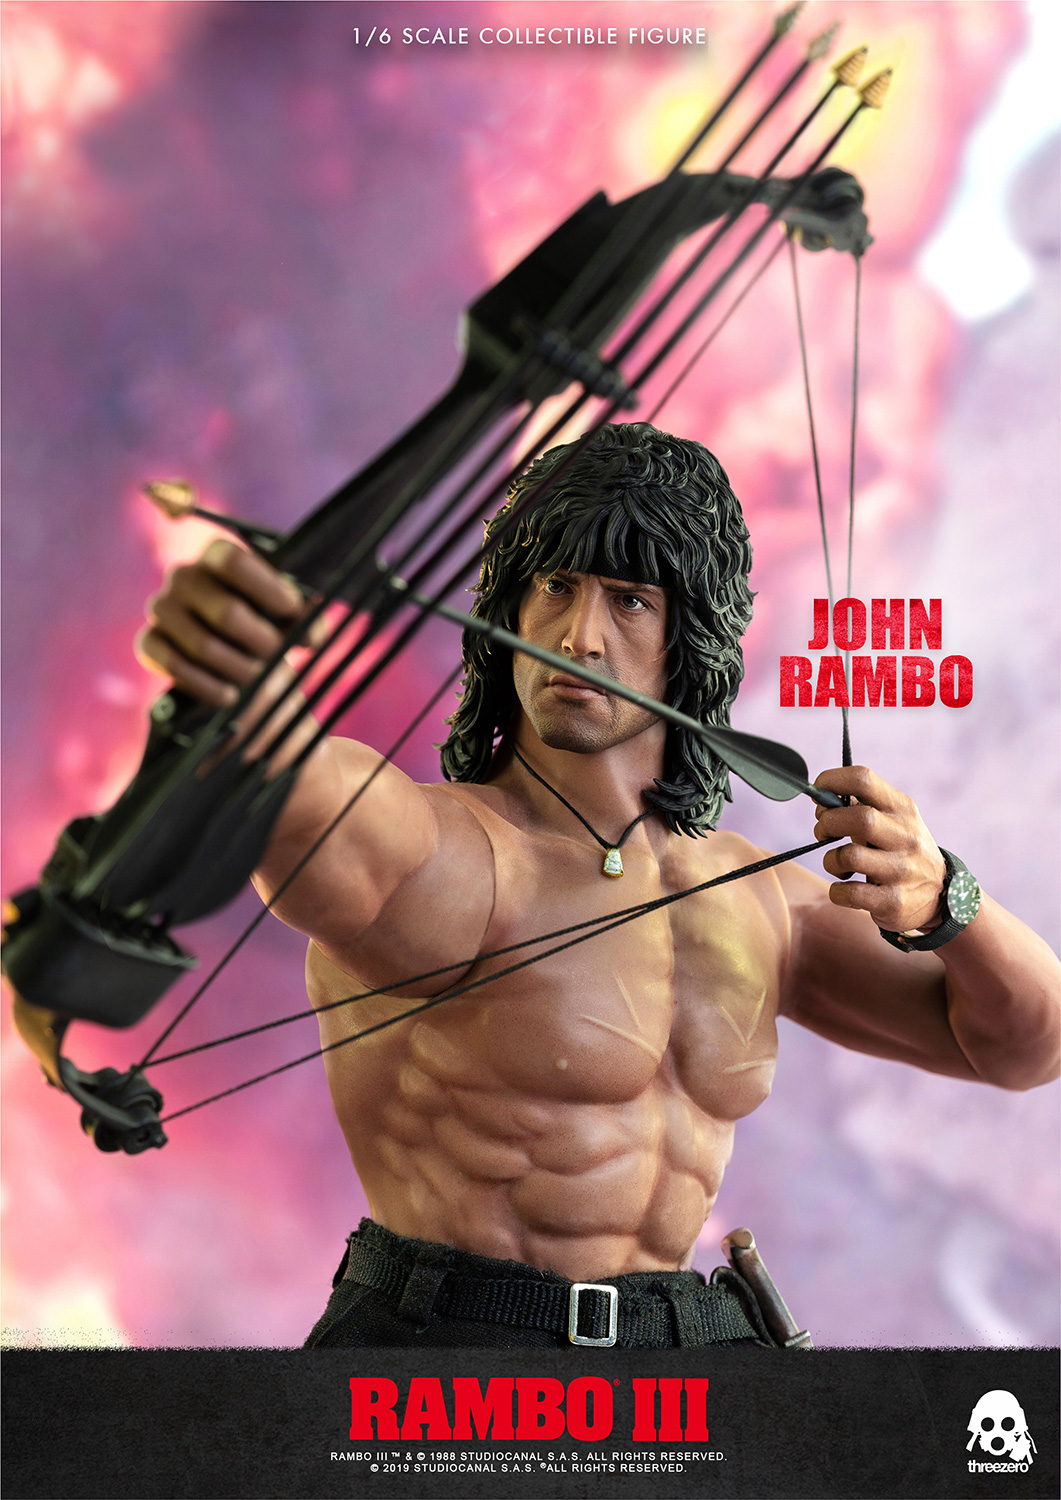 John Rambo - Rambo III - Sixth Scale Figure by Threezero